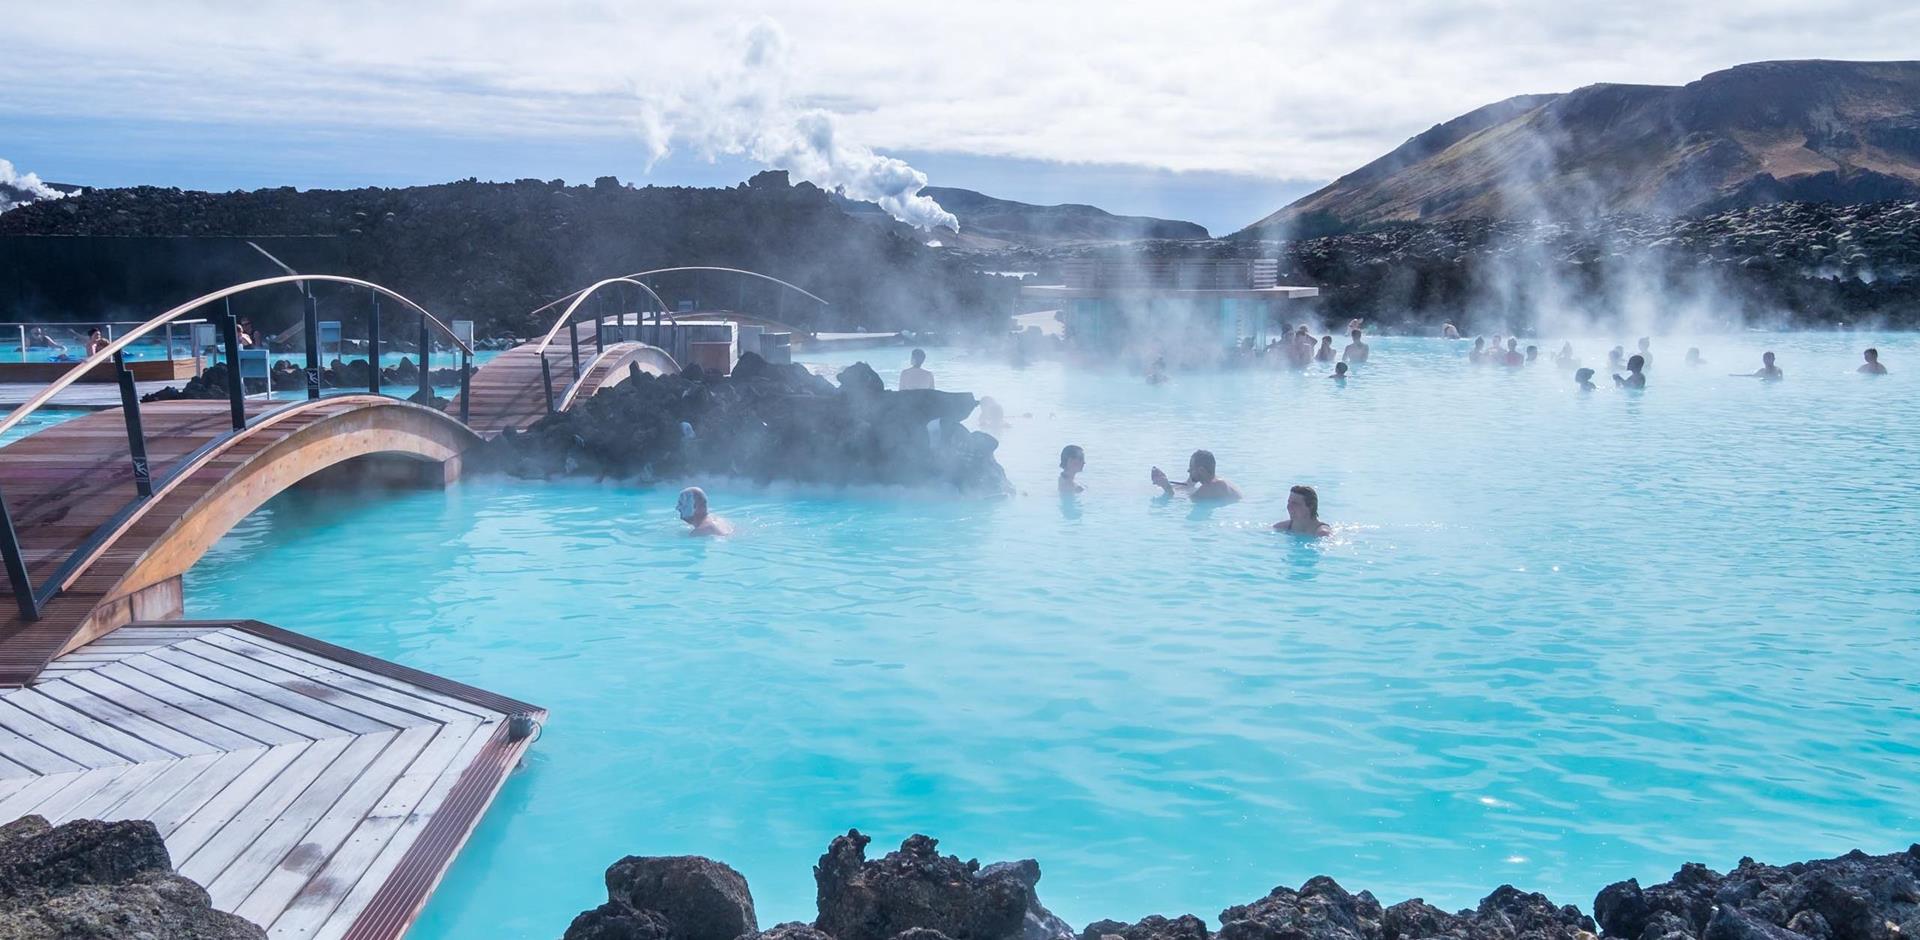 Icelands hot springs